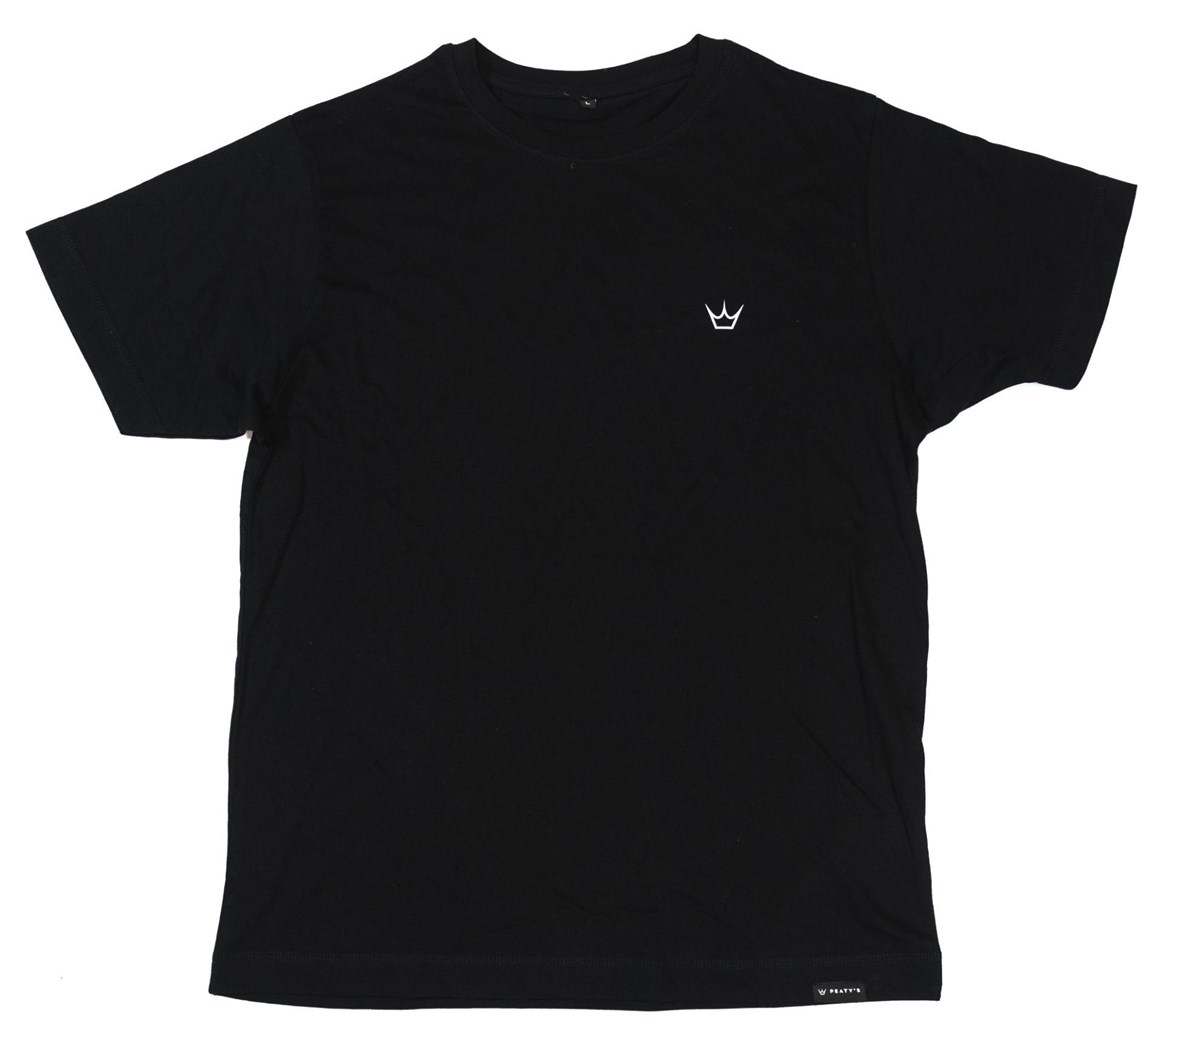 Peatys Pub Wear Printed Short Sleeve T-Shirt product image